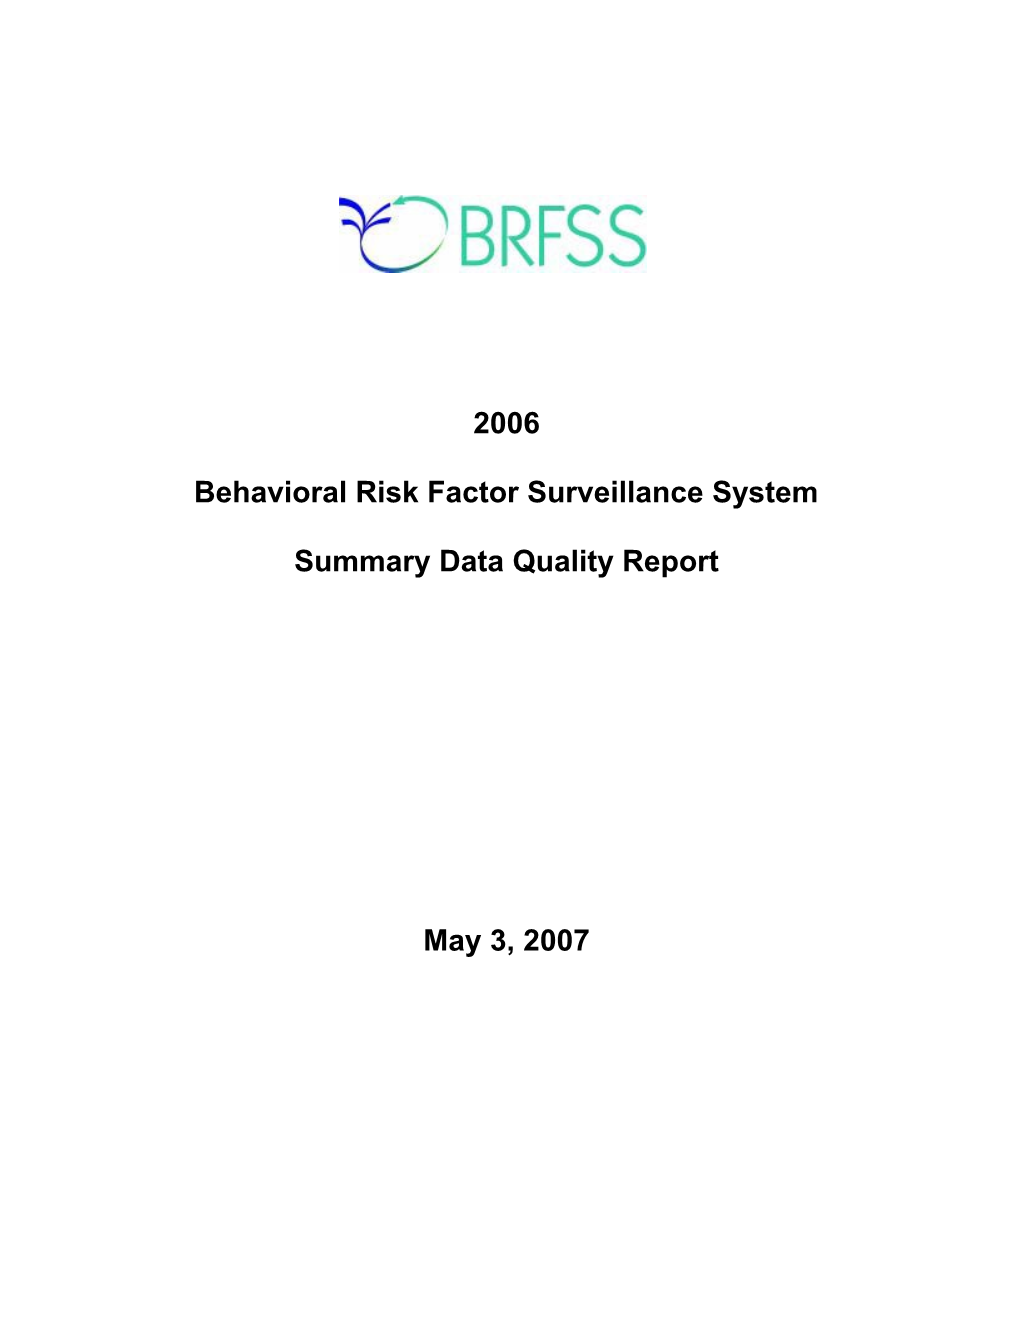 2006 Summary Data Quality Report